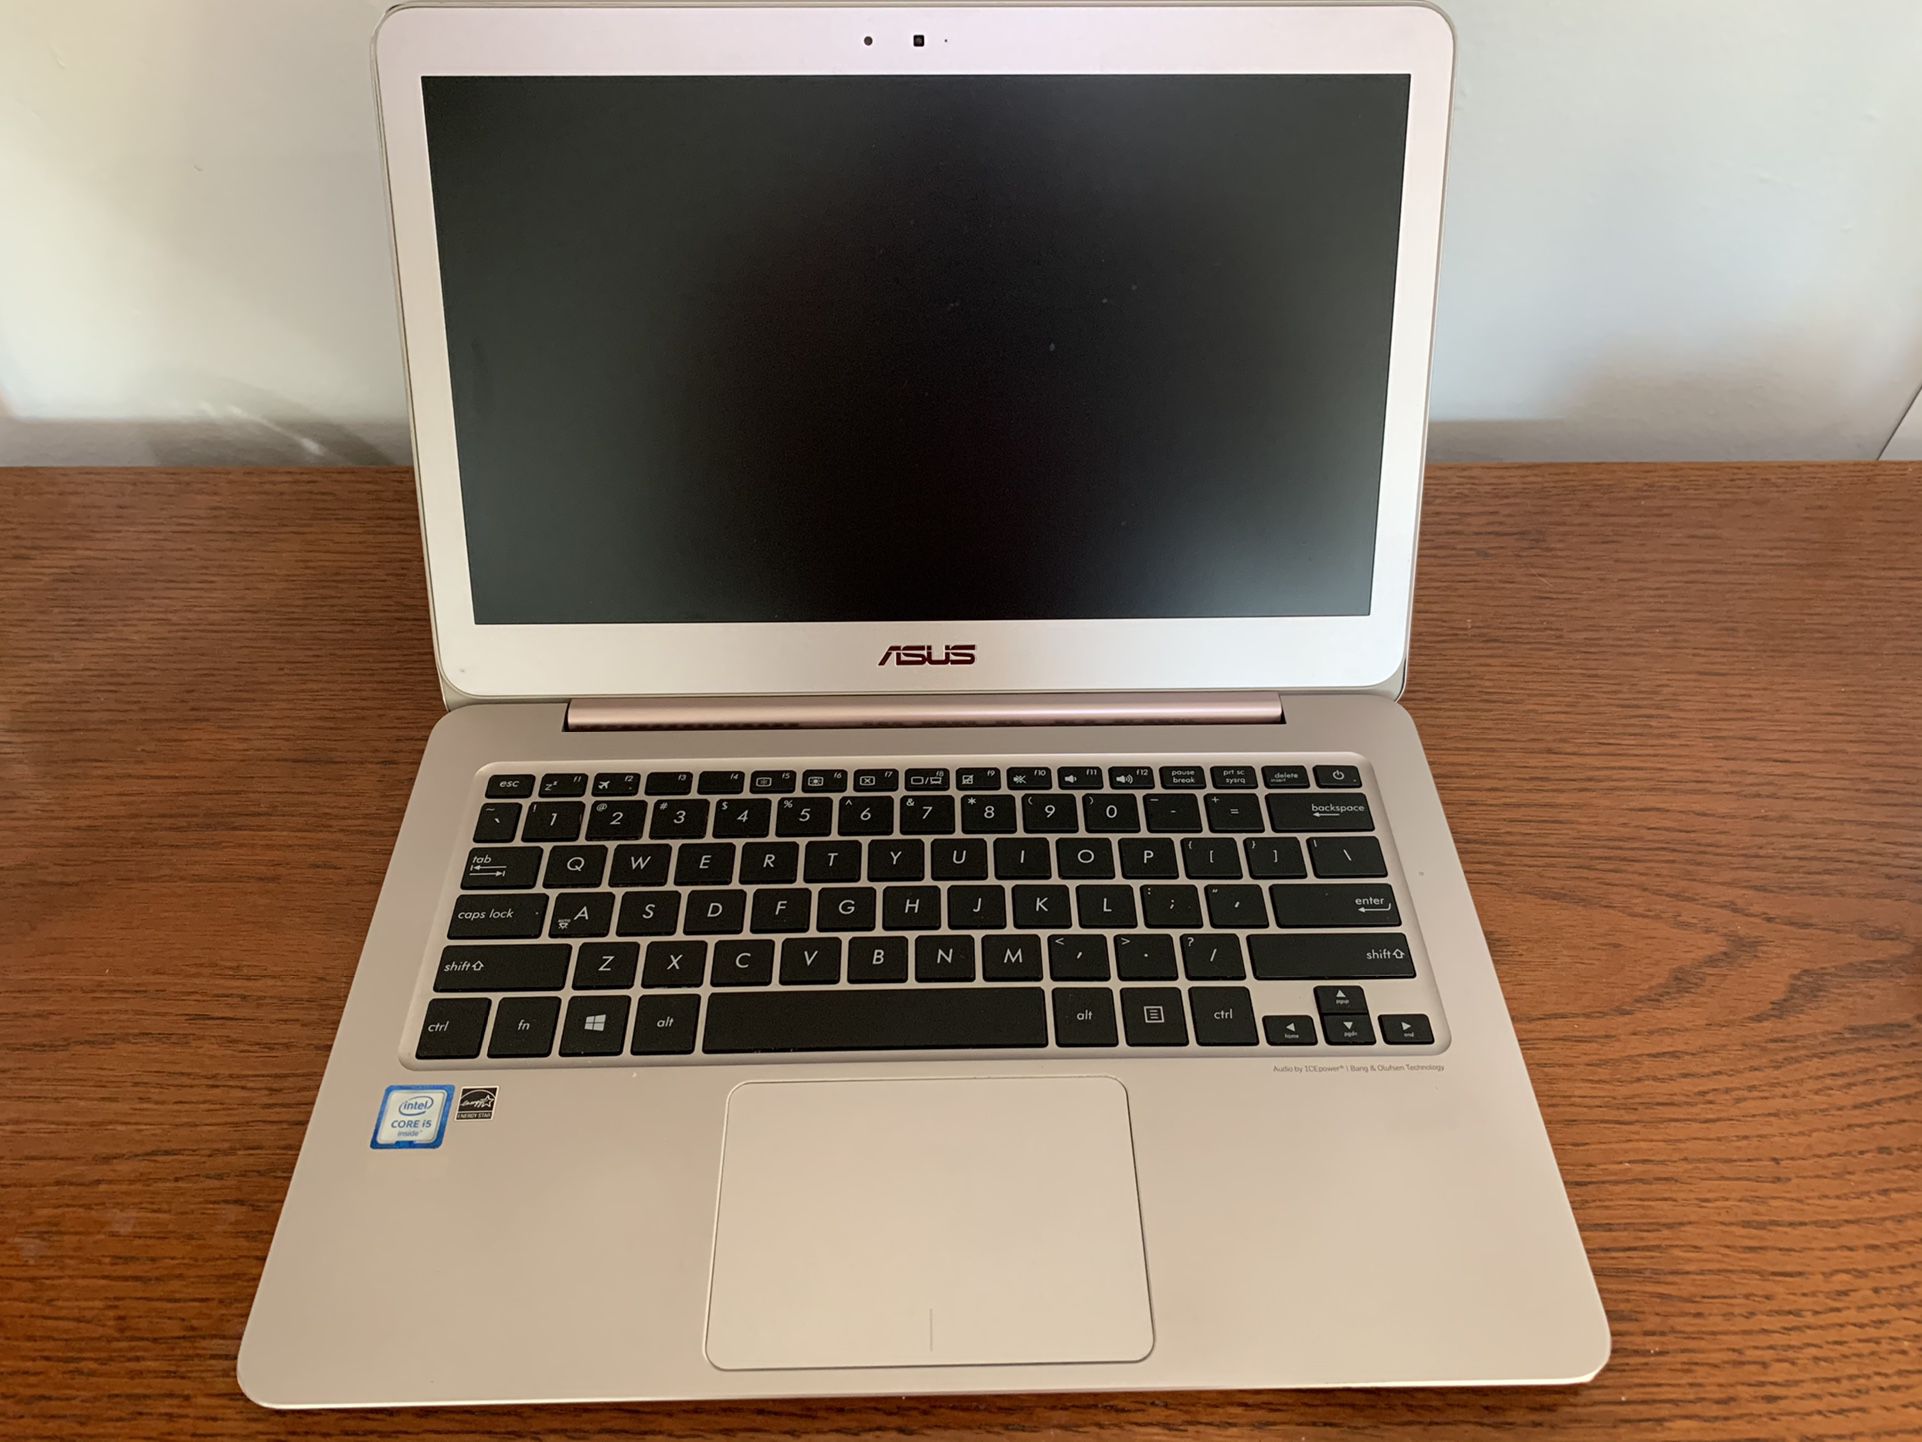 13” ASUS Zenbook Laptop